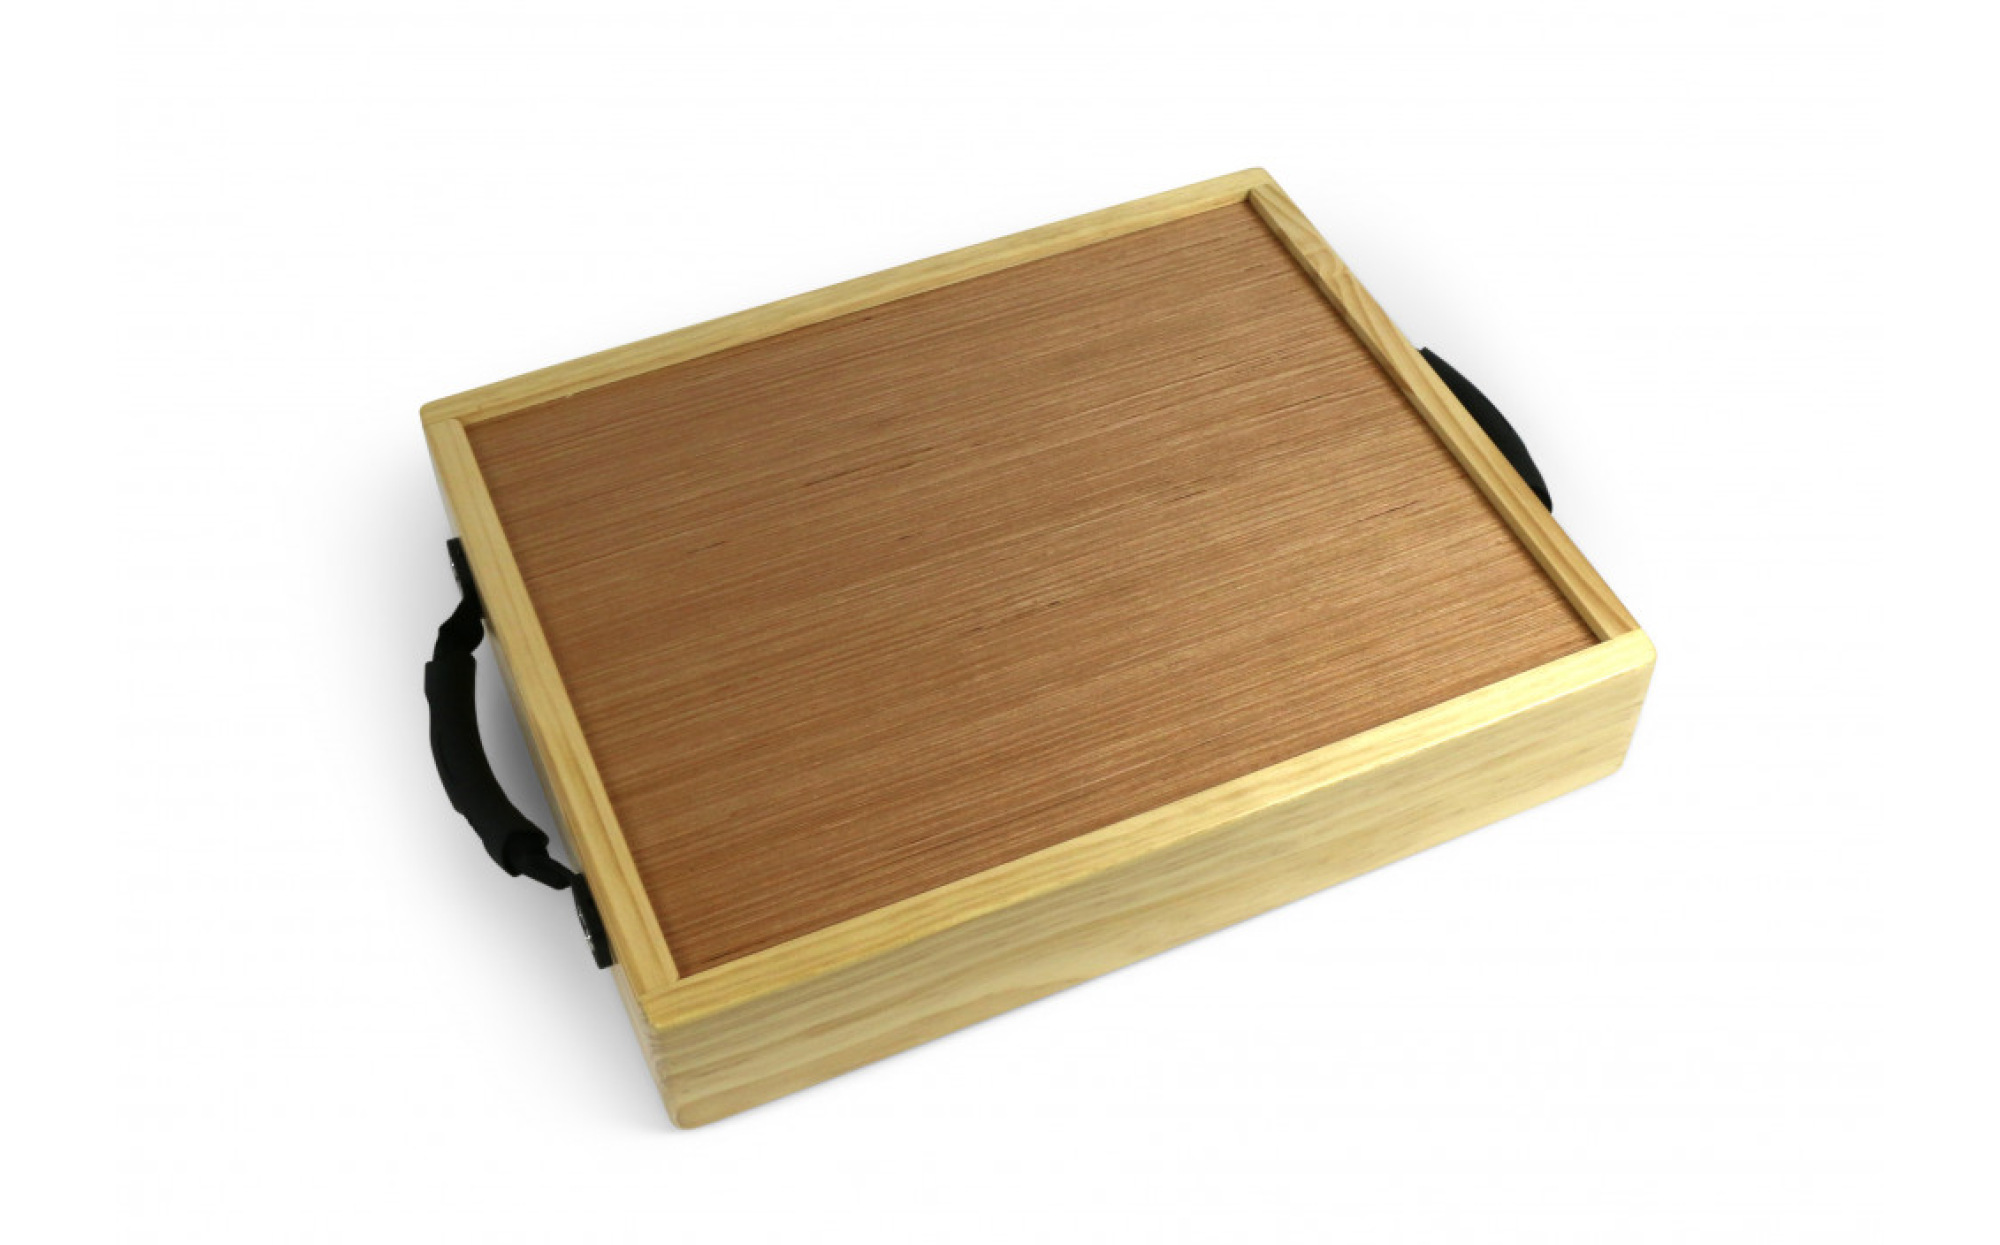 Basic Portable Sand Tray Starter Kit plus Portable Wooden Tray